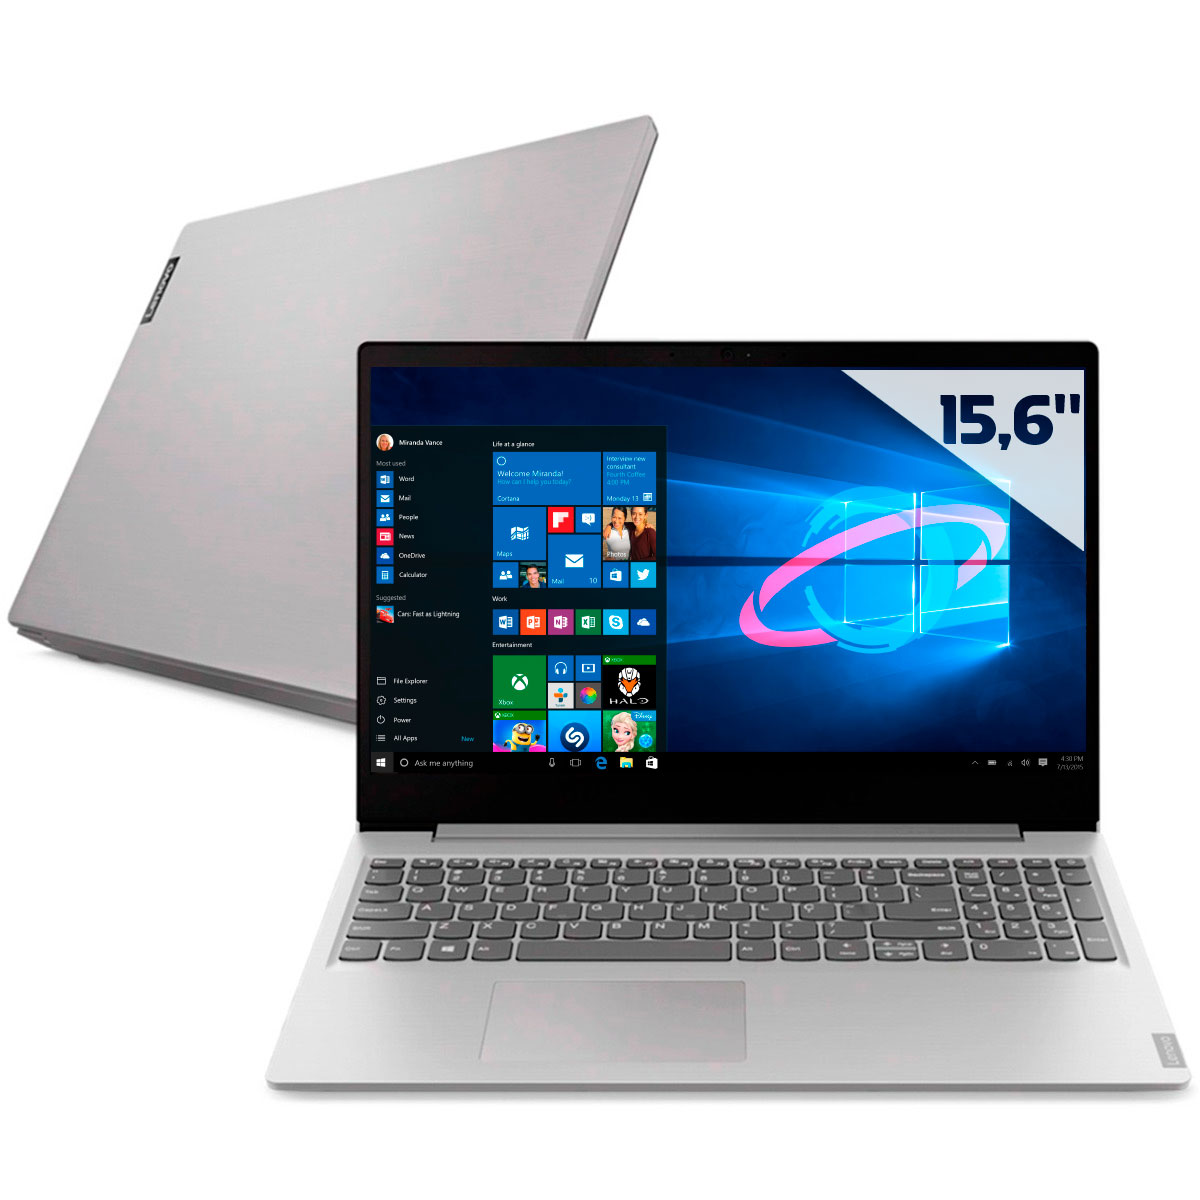 Notebook Lenovo Ideapad S145 - Intel i3 1005G1, 8GB, SSD 256GB + HD 1TB, Tela 15.6